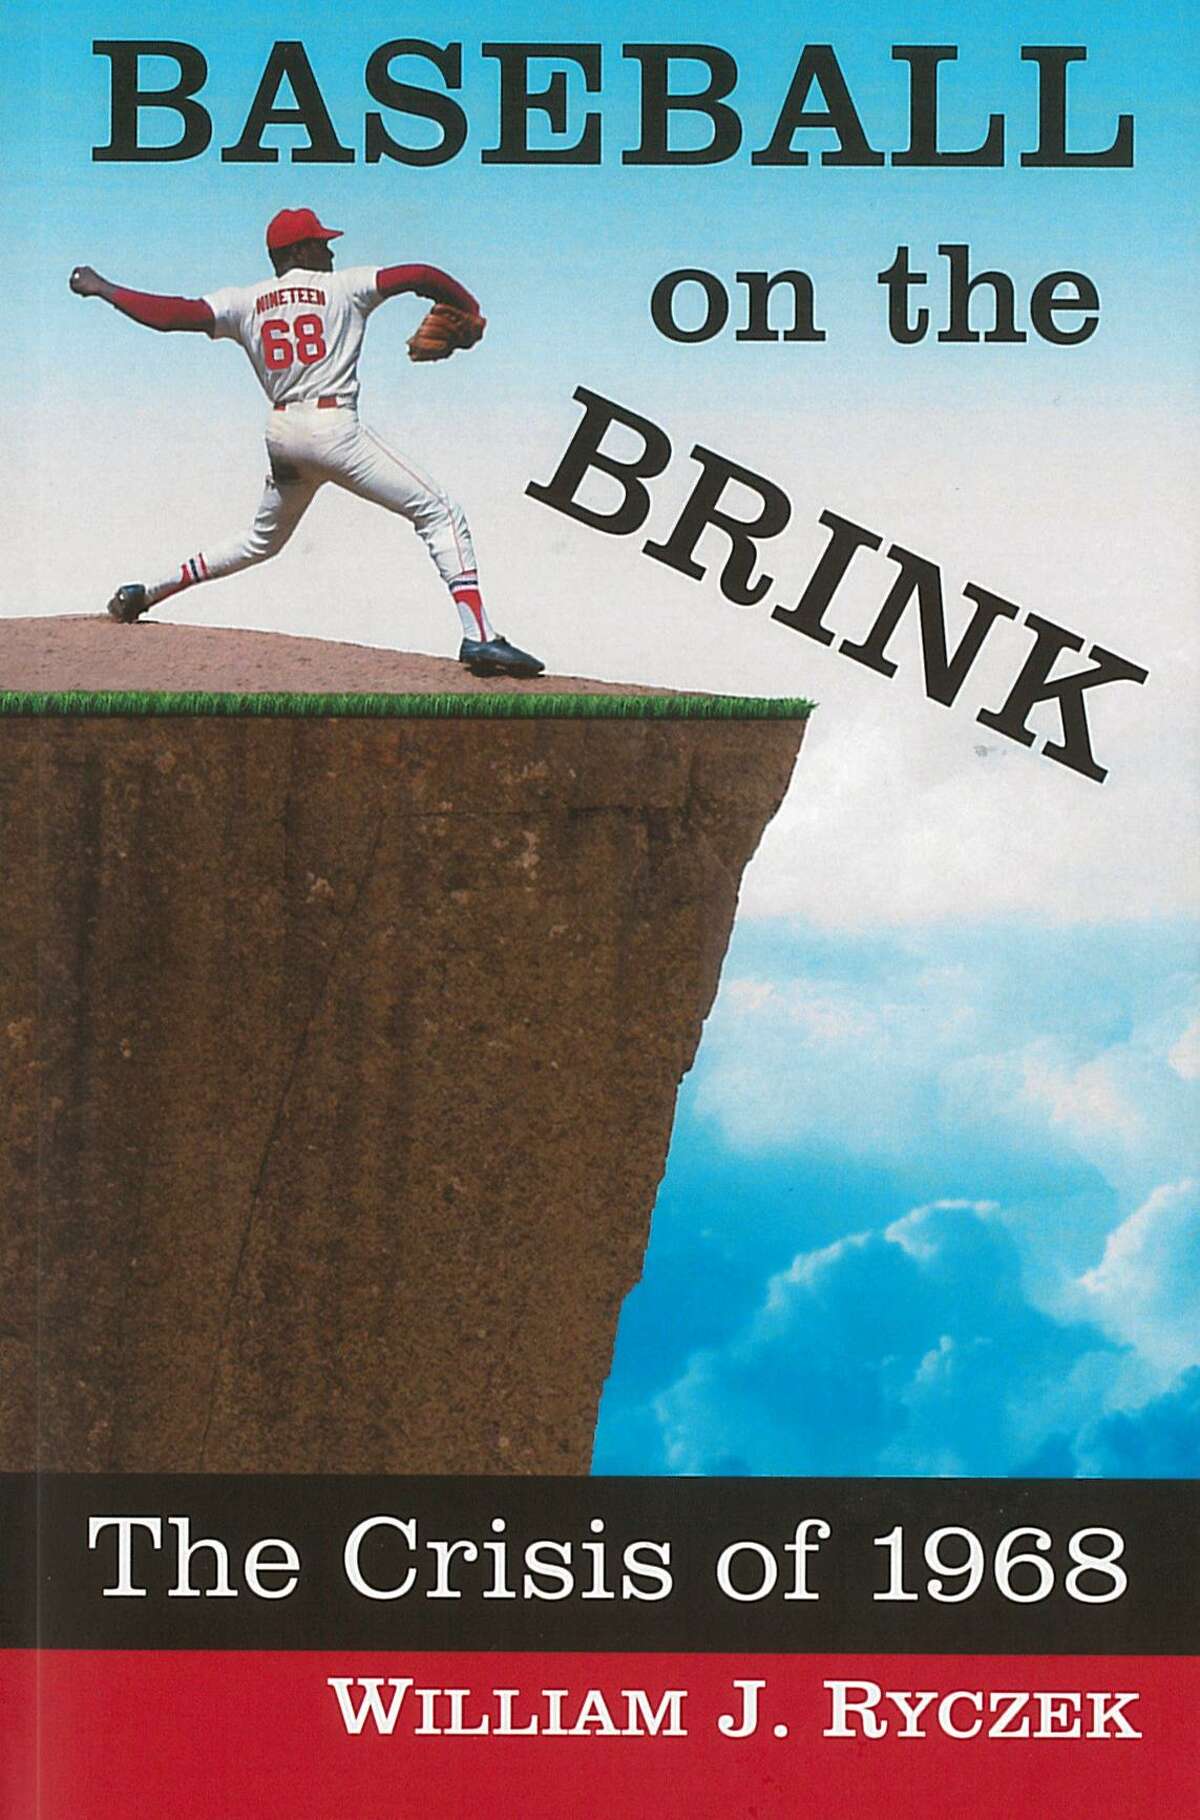 Baseball on the Brink: The crisis of 1968, by William J. Ryczek.